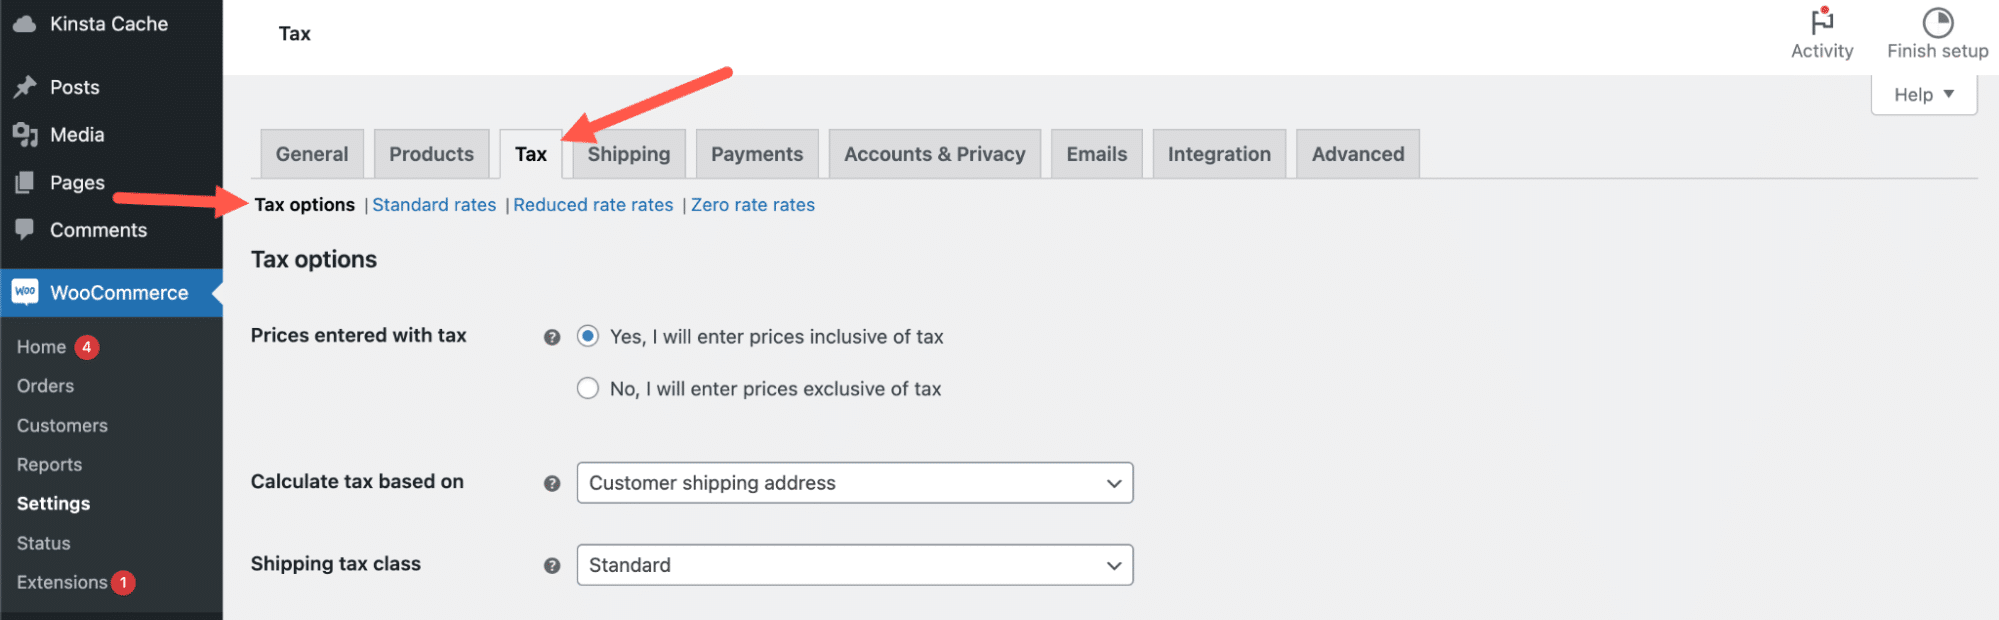 Access all tax settings in WooCommerce settings